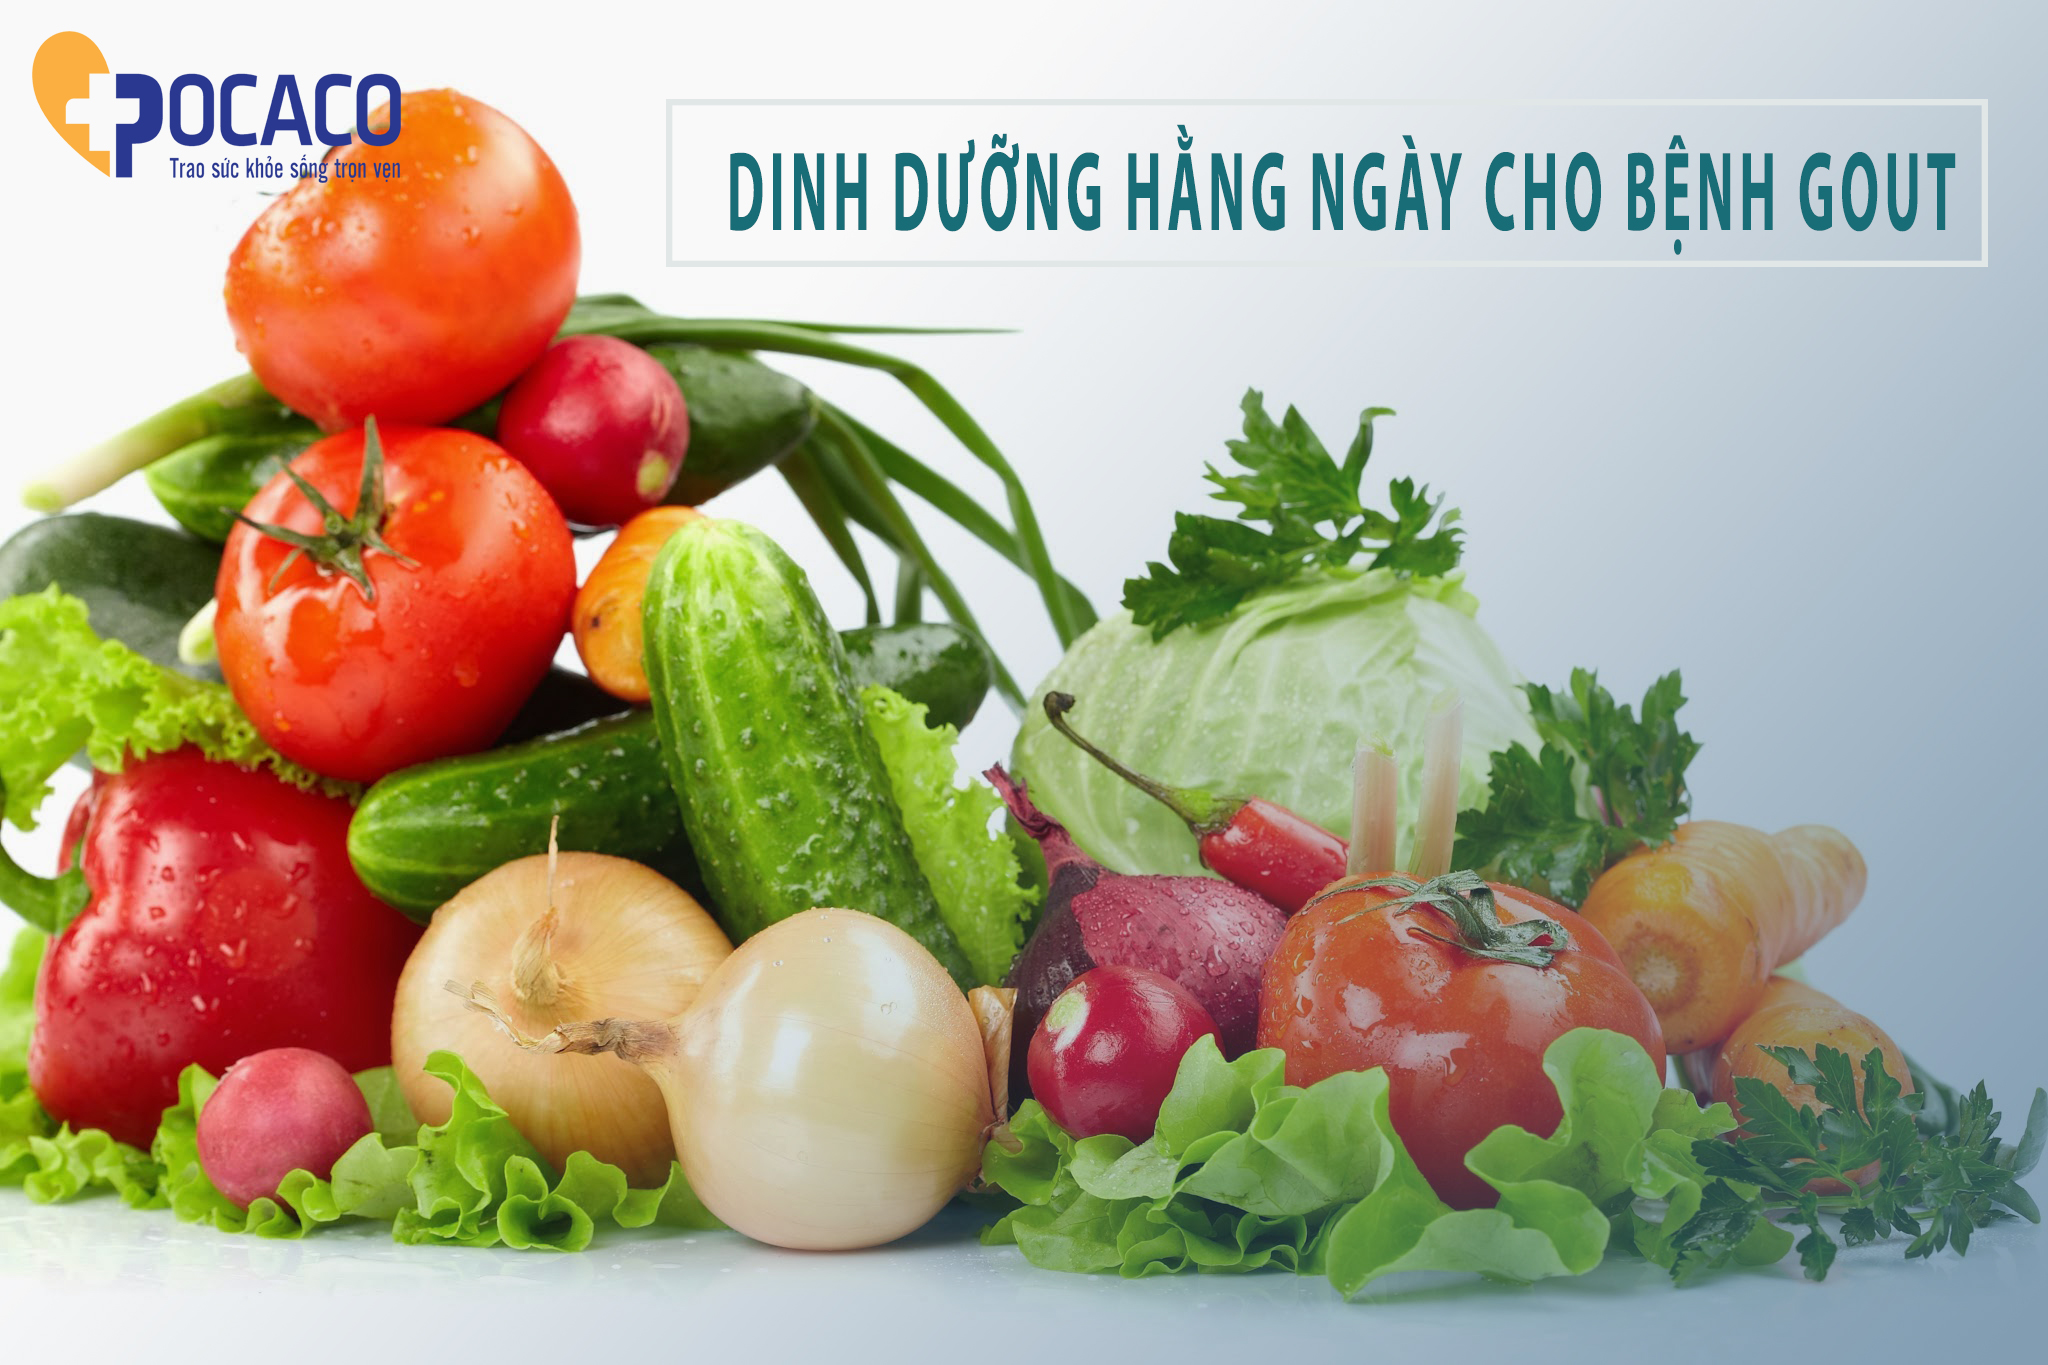 benh-dong-thoi-va-nhung-thuc-pham-danh-rieng-cho-benh-gout-4